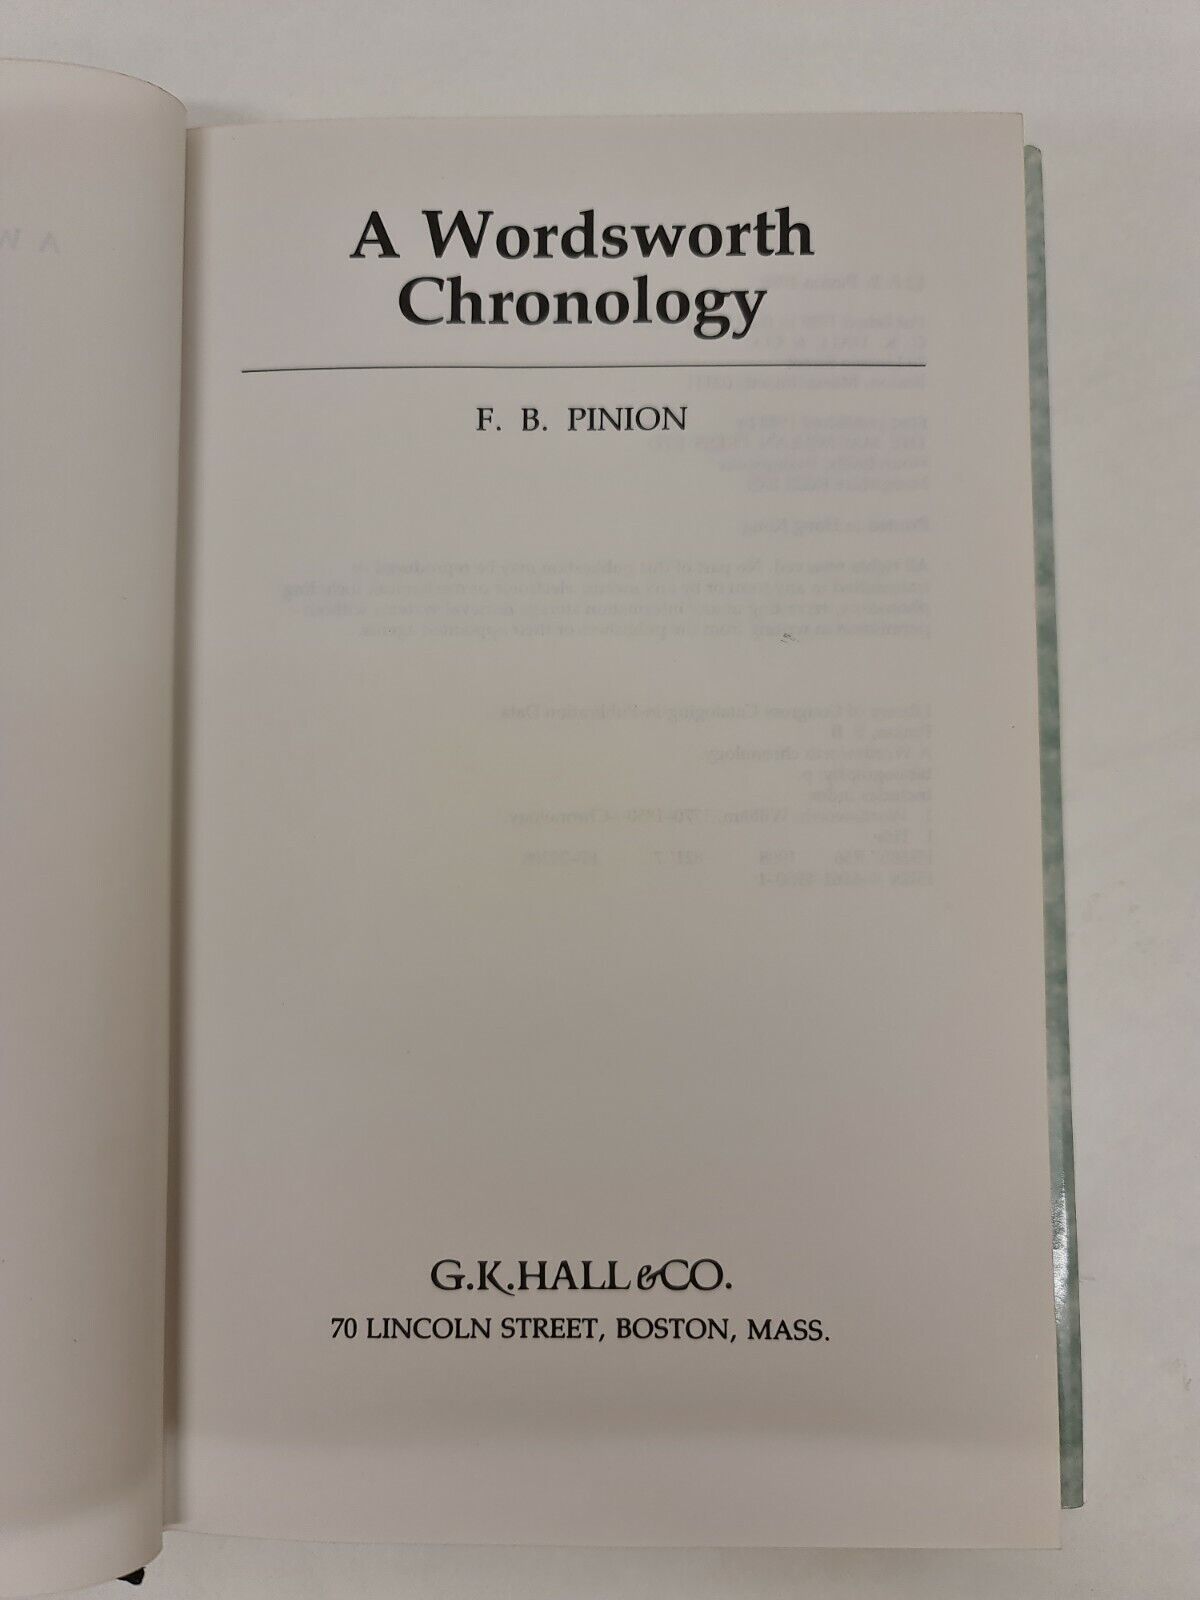 Wordsworth Chronology by F.B. Pinion